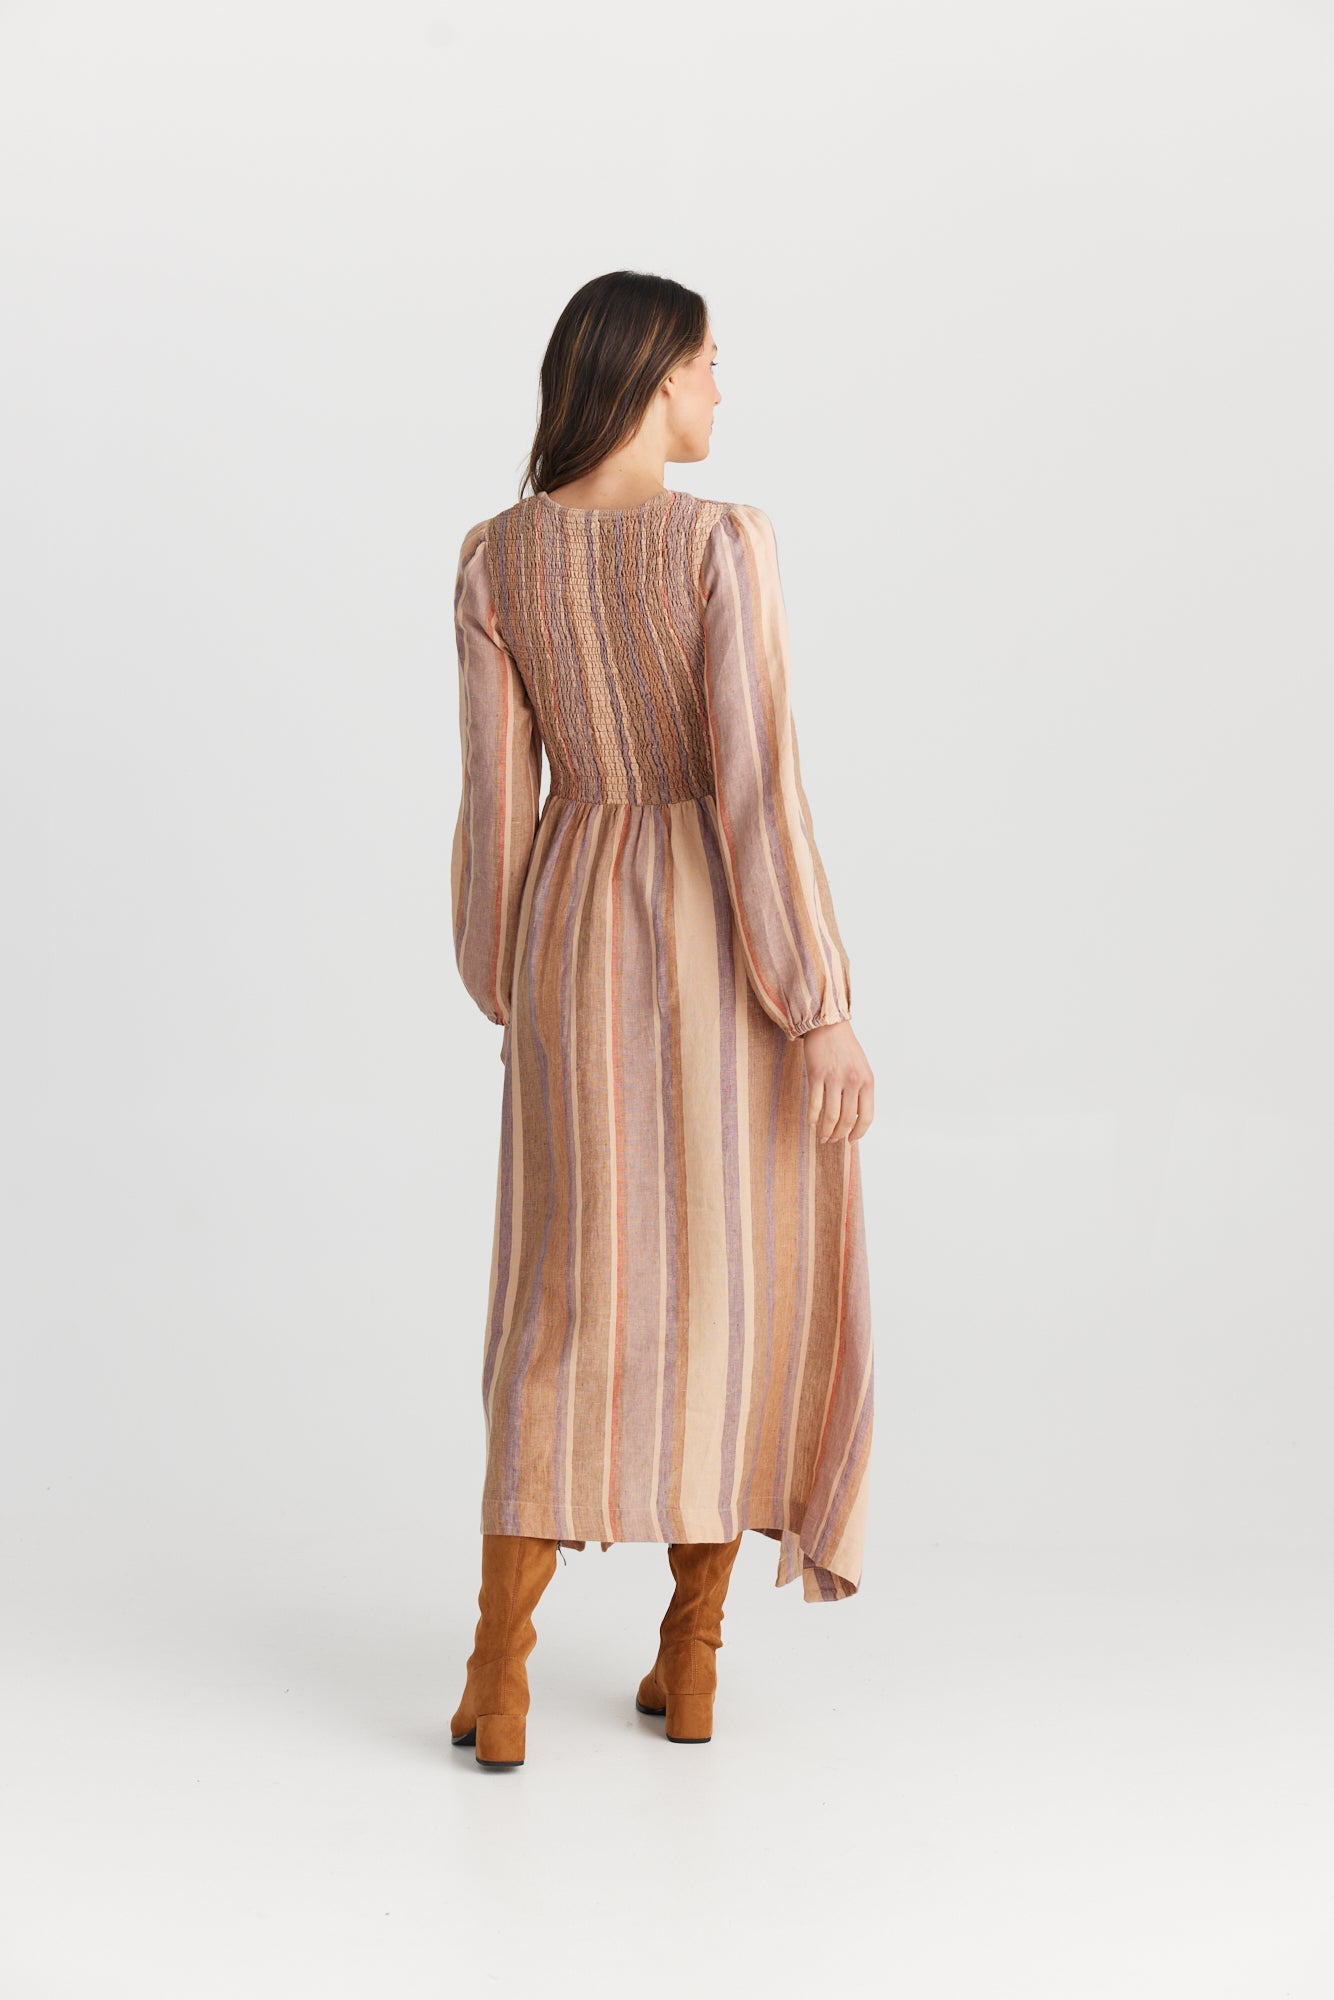 Francisco Dress - Santal Stripe-Dresses-The Shanty Corporation-The Bay Room